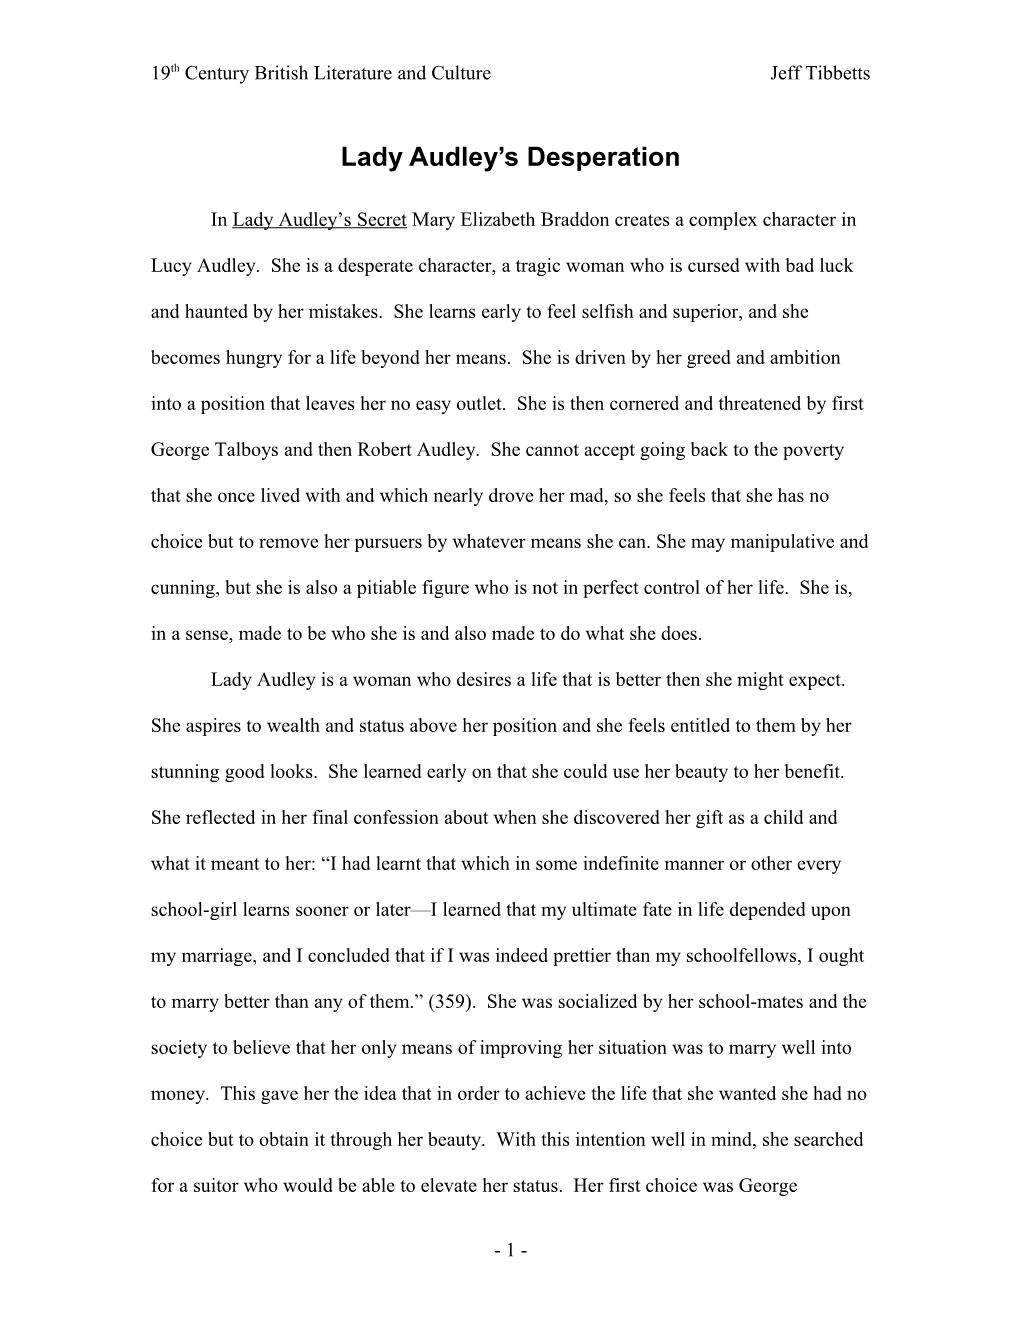 Lady Audley S Desperation